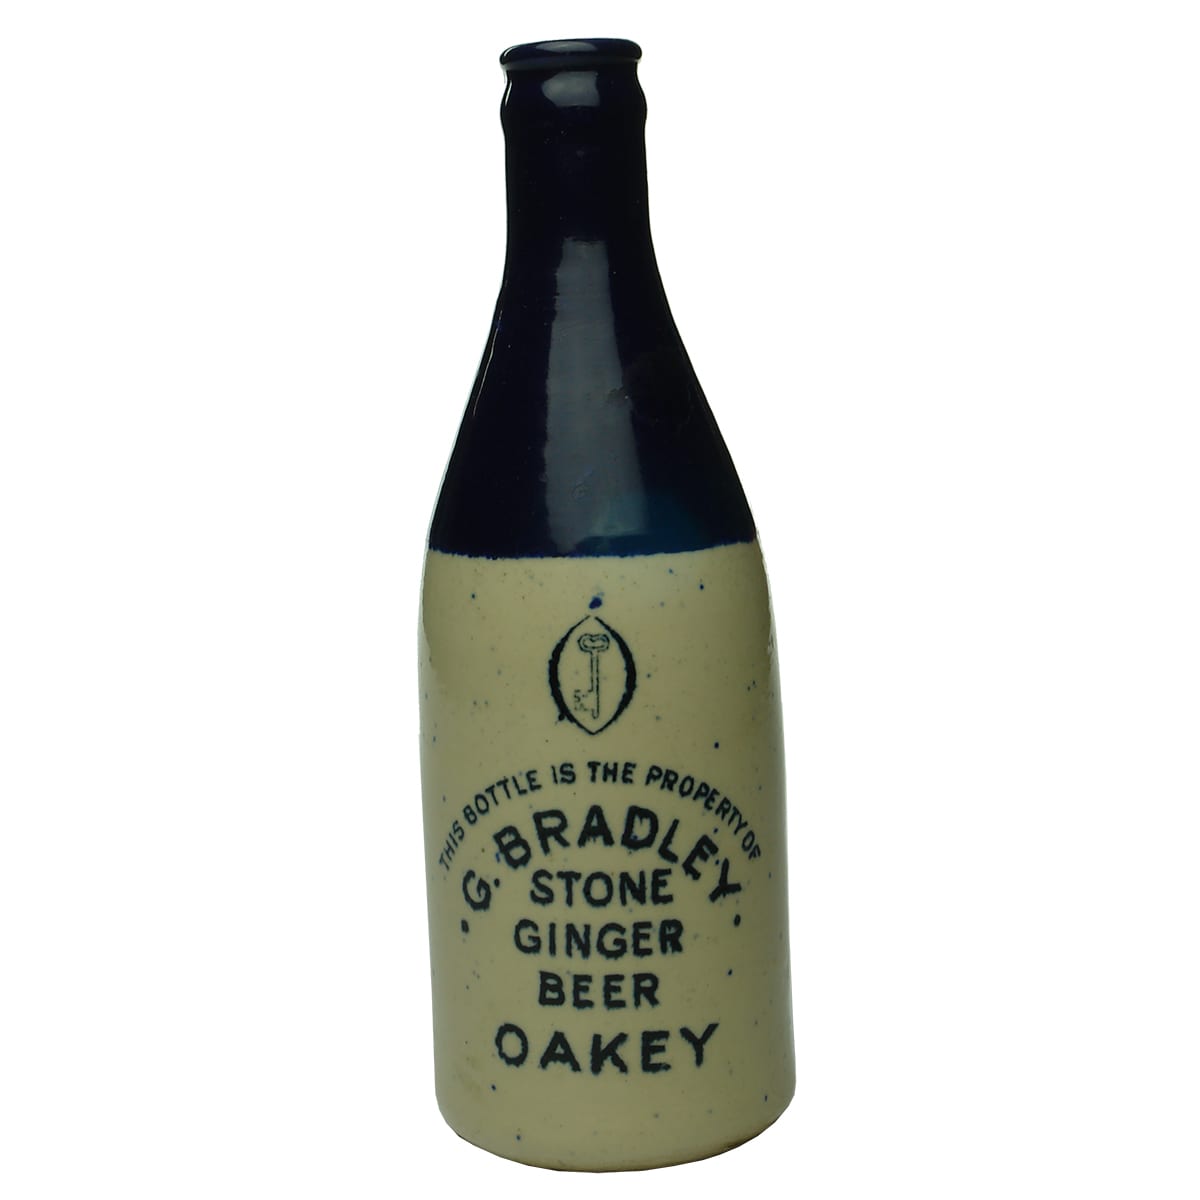 Ginger Beer. G. Bradley, Oakey. Crown Seal. Champagne. Blue Top.